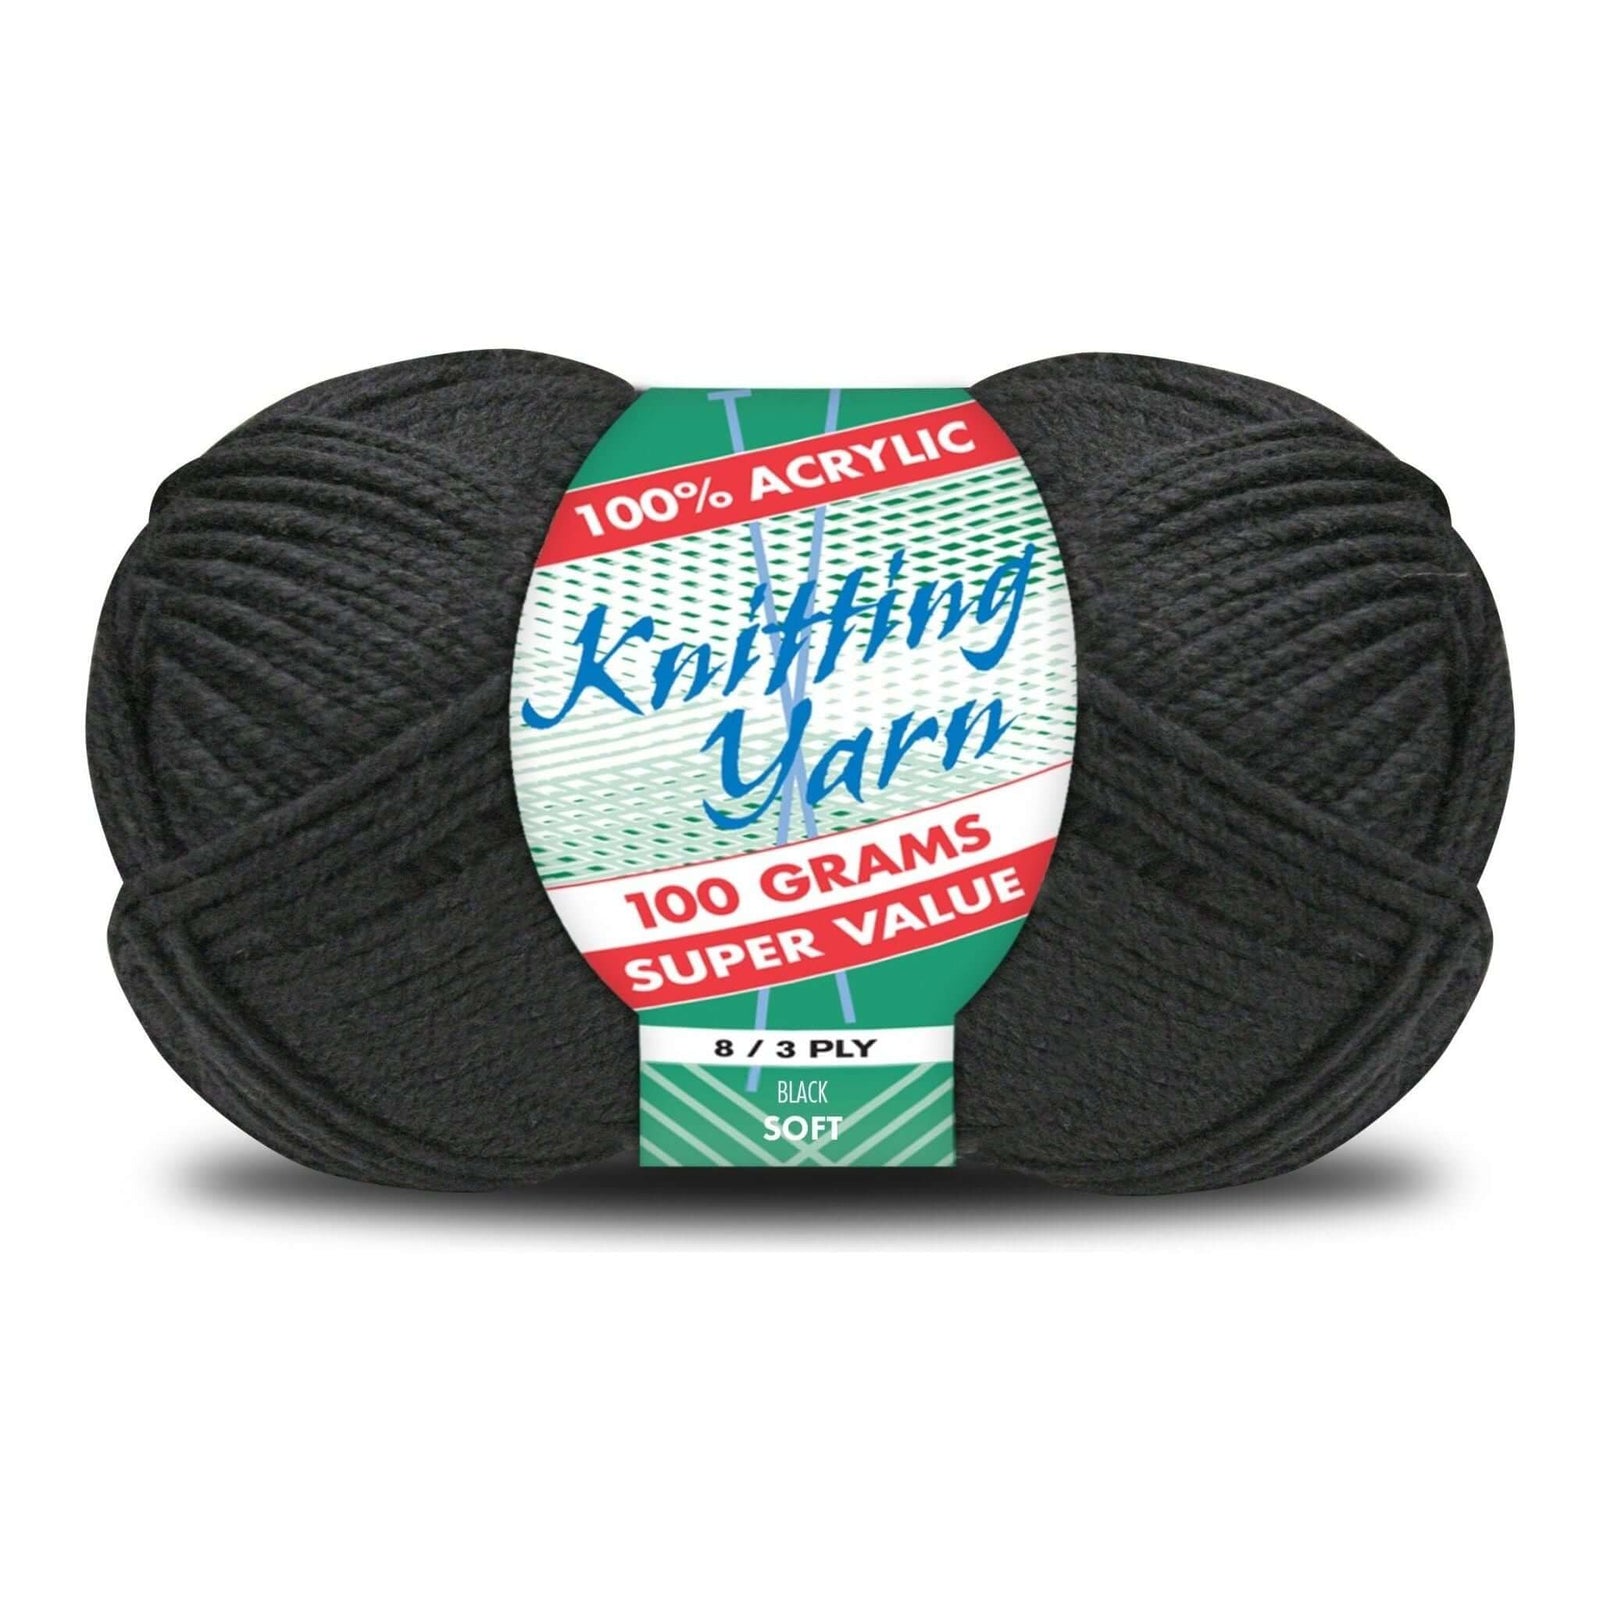 2 ply Knitting Wool, Australian pure Wool Yarn